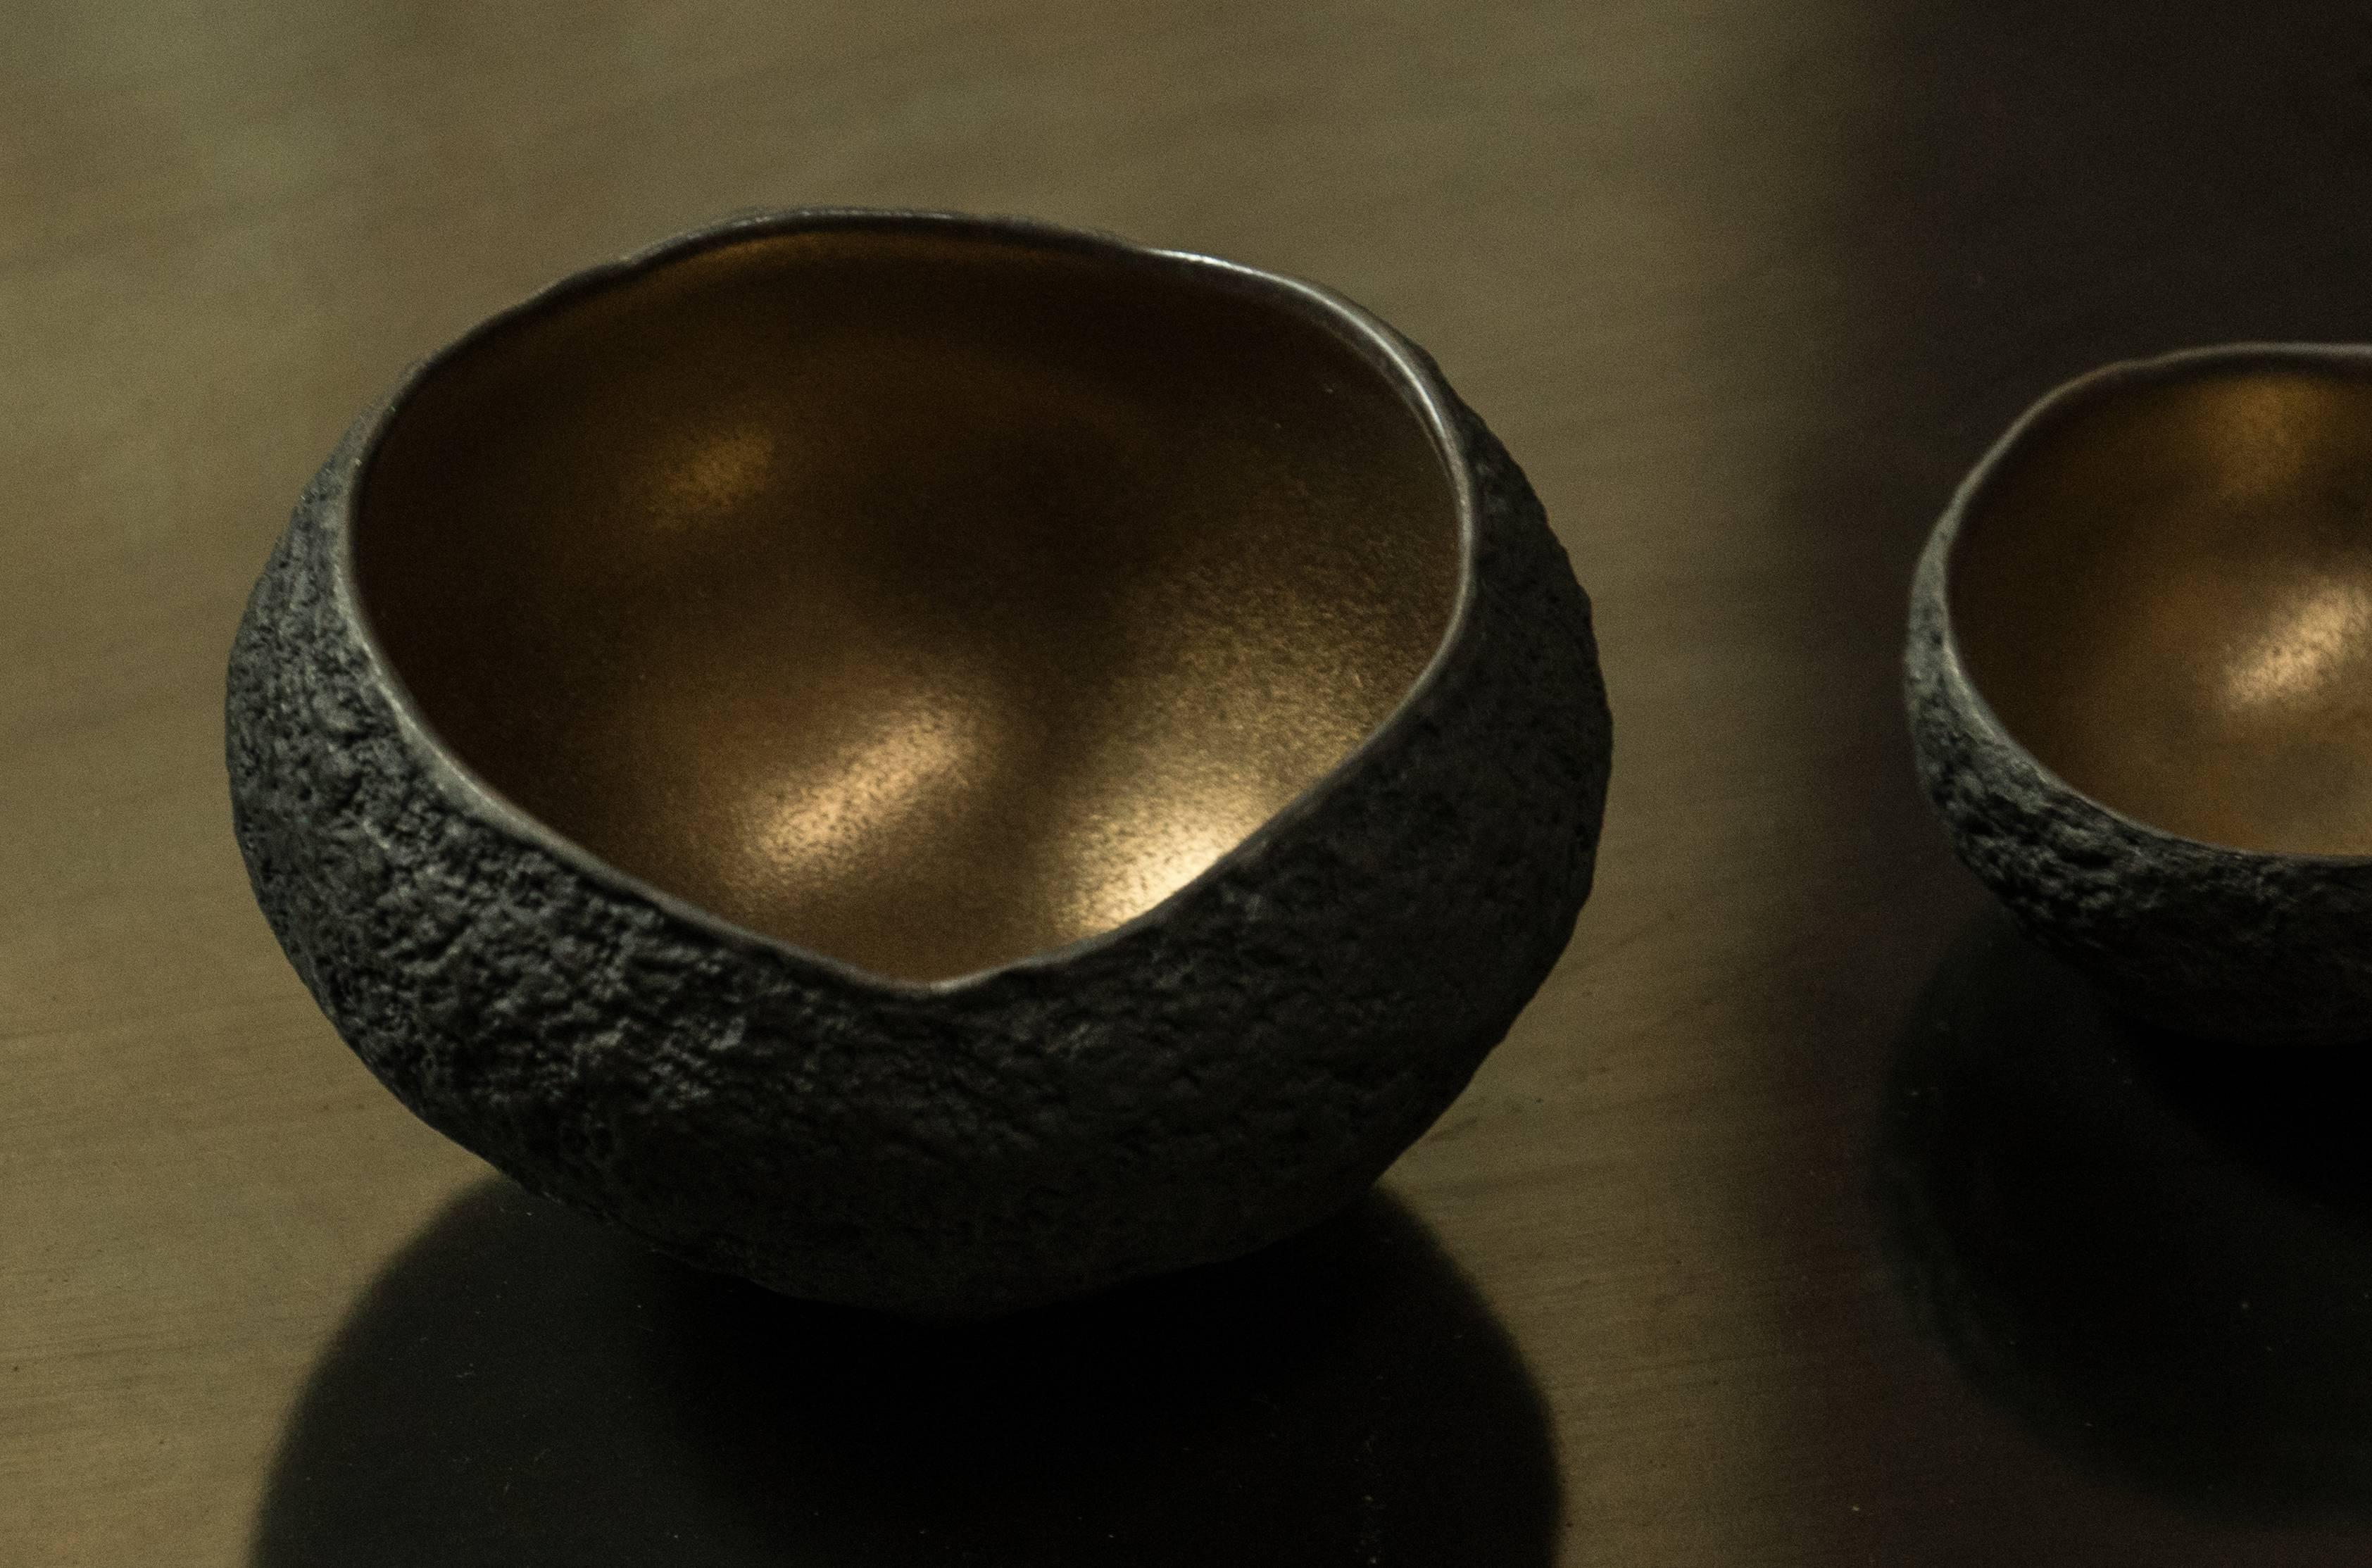 Fired Ceramic Bowls with Bronze Interior by Cristina Salusti